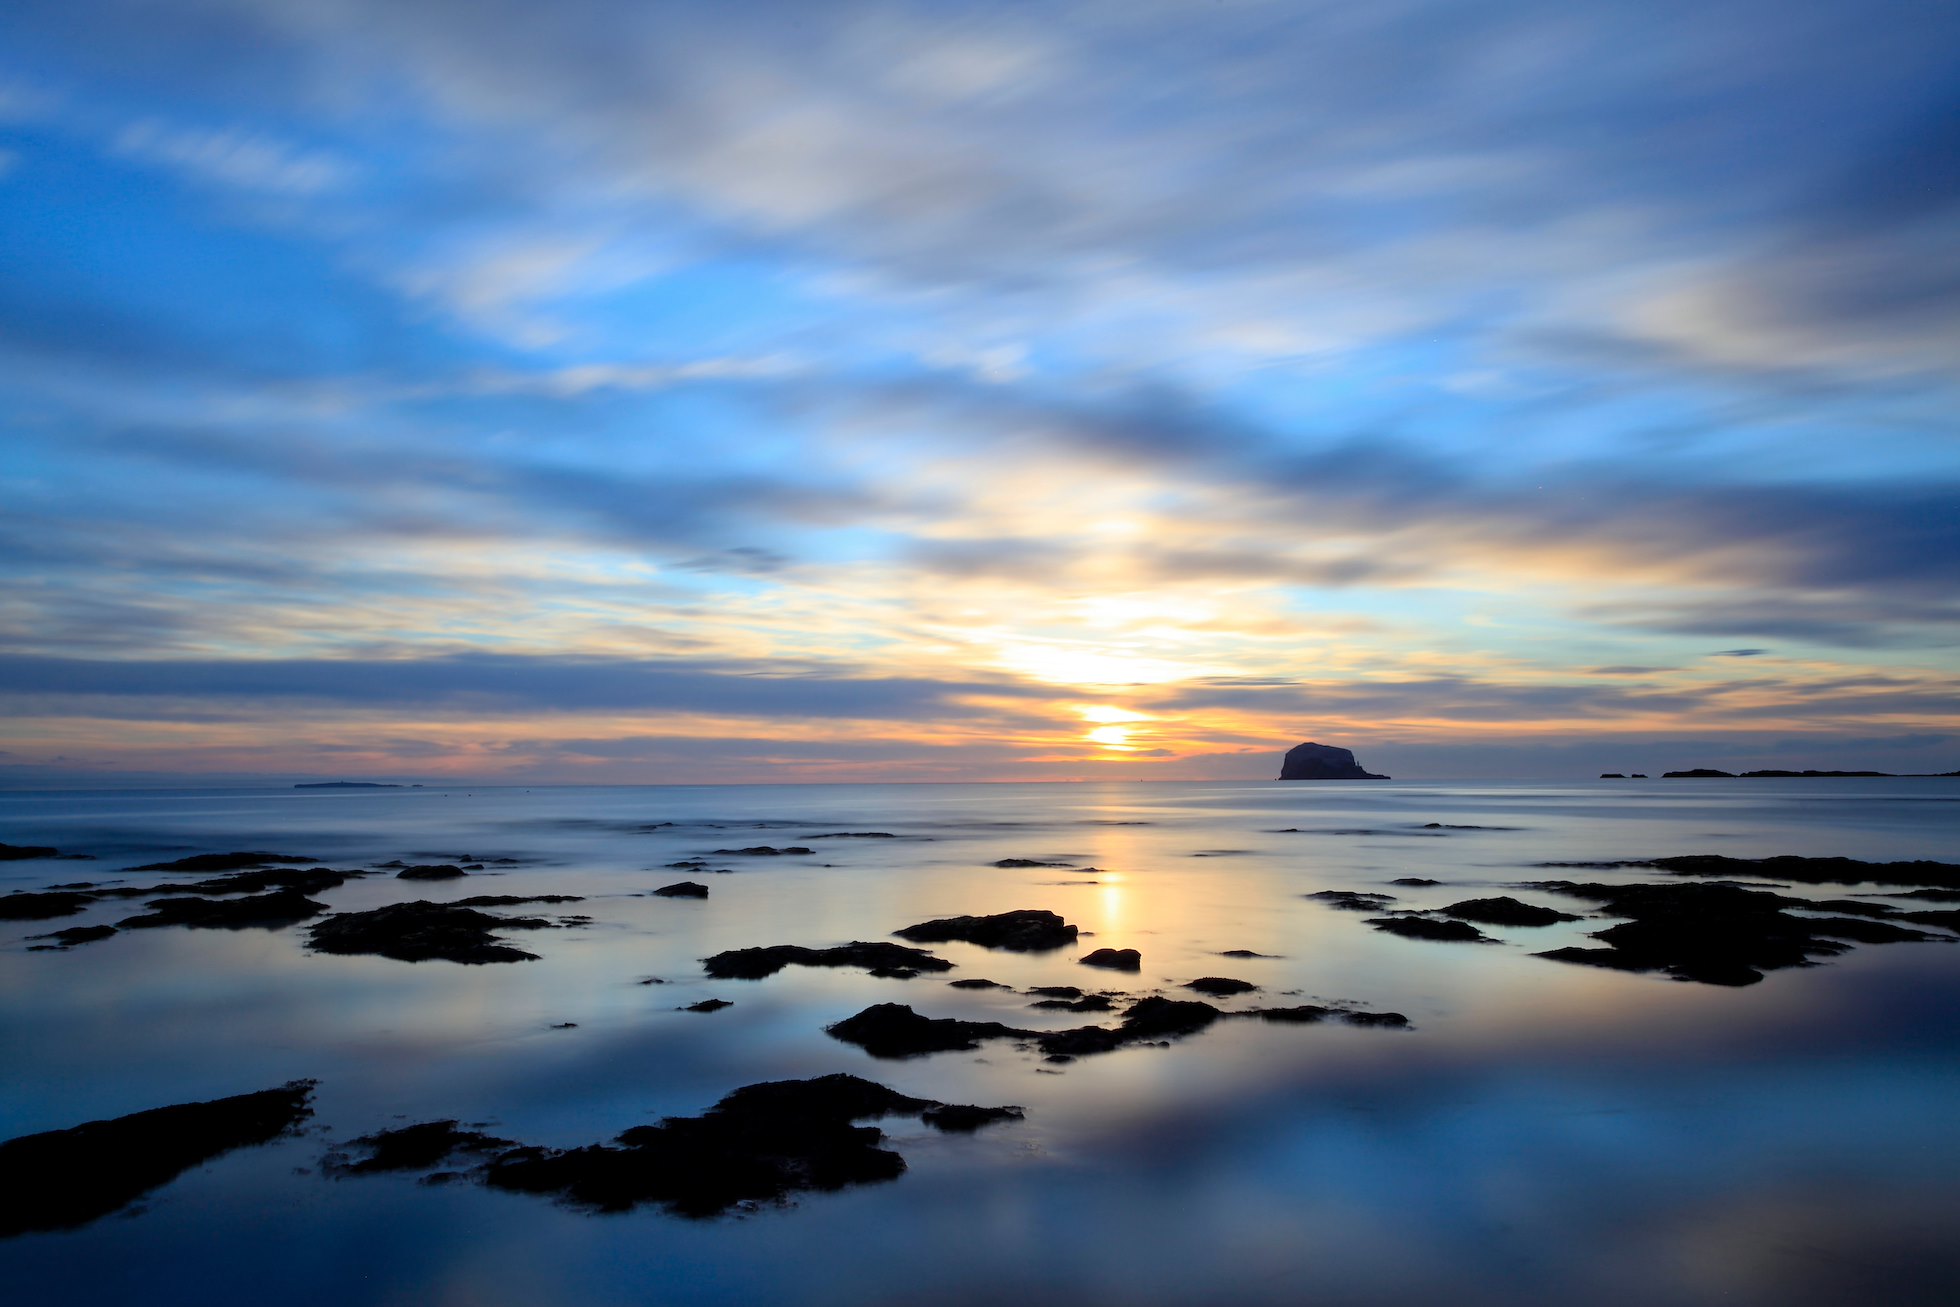 Bass Rock at dawn, North Berwick, Scotland.